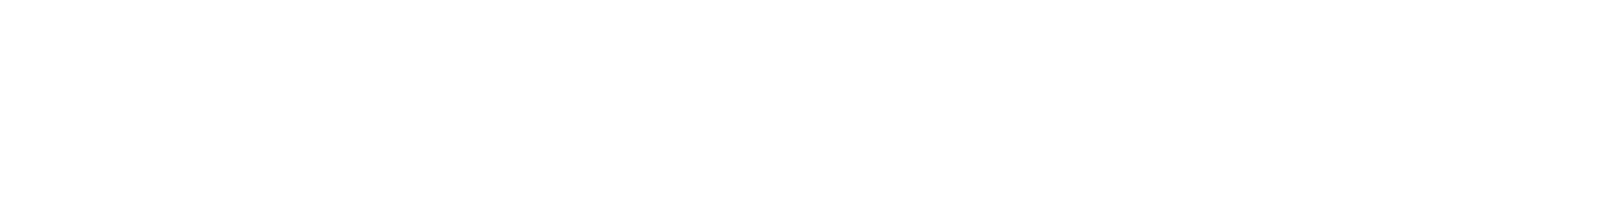 Schenker_logo1.png